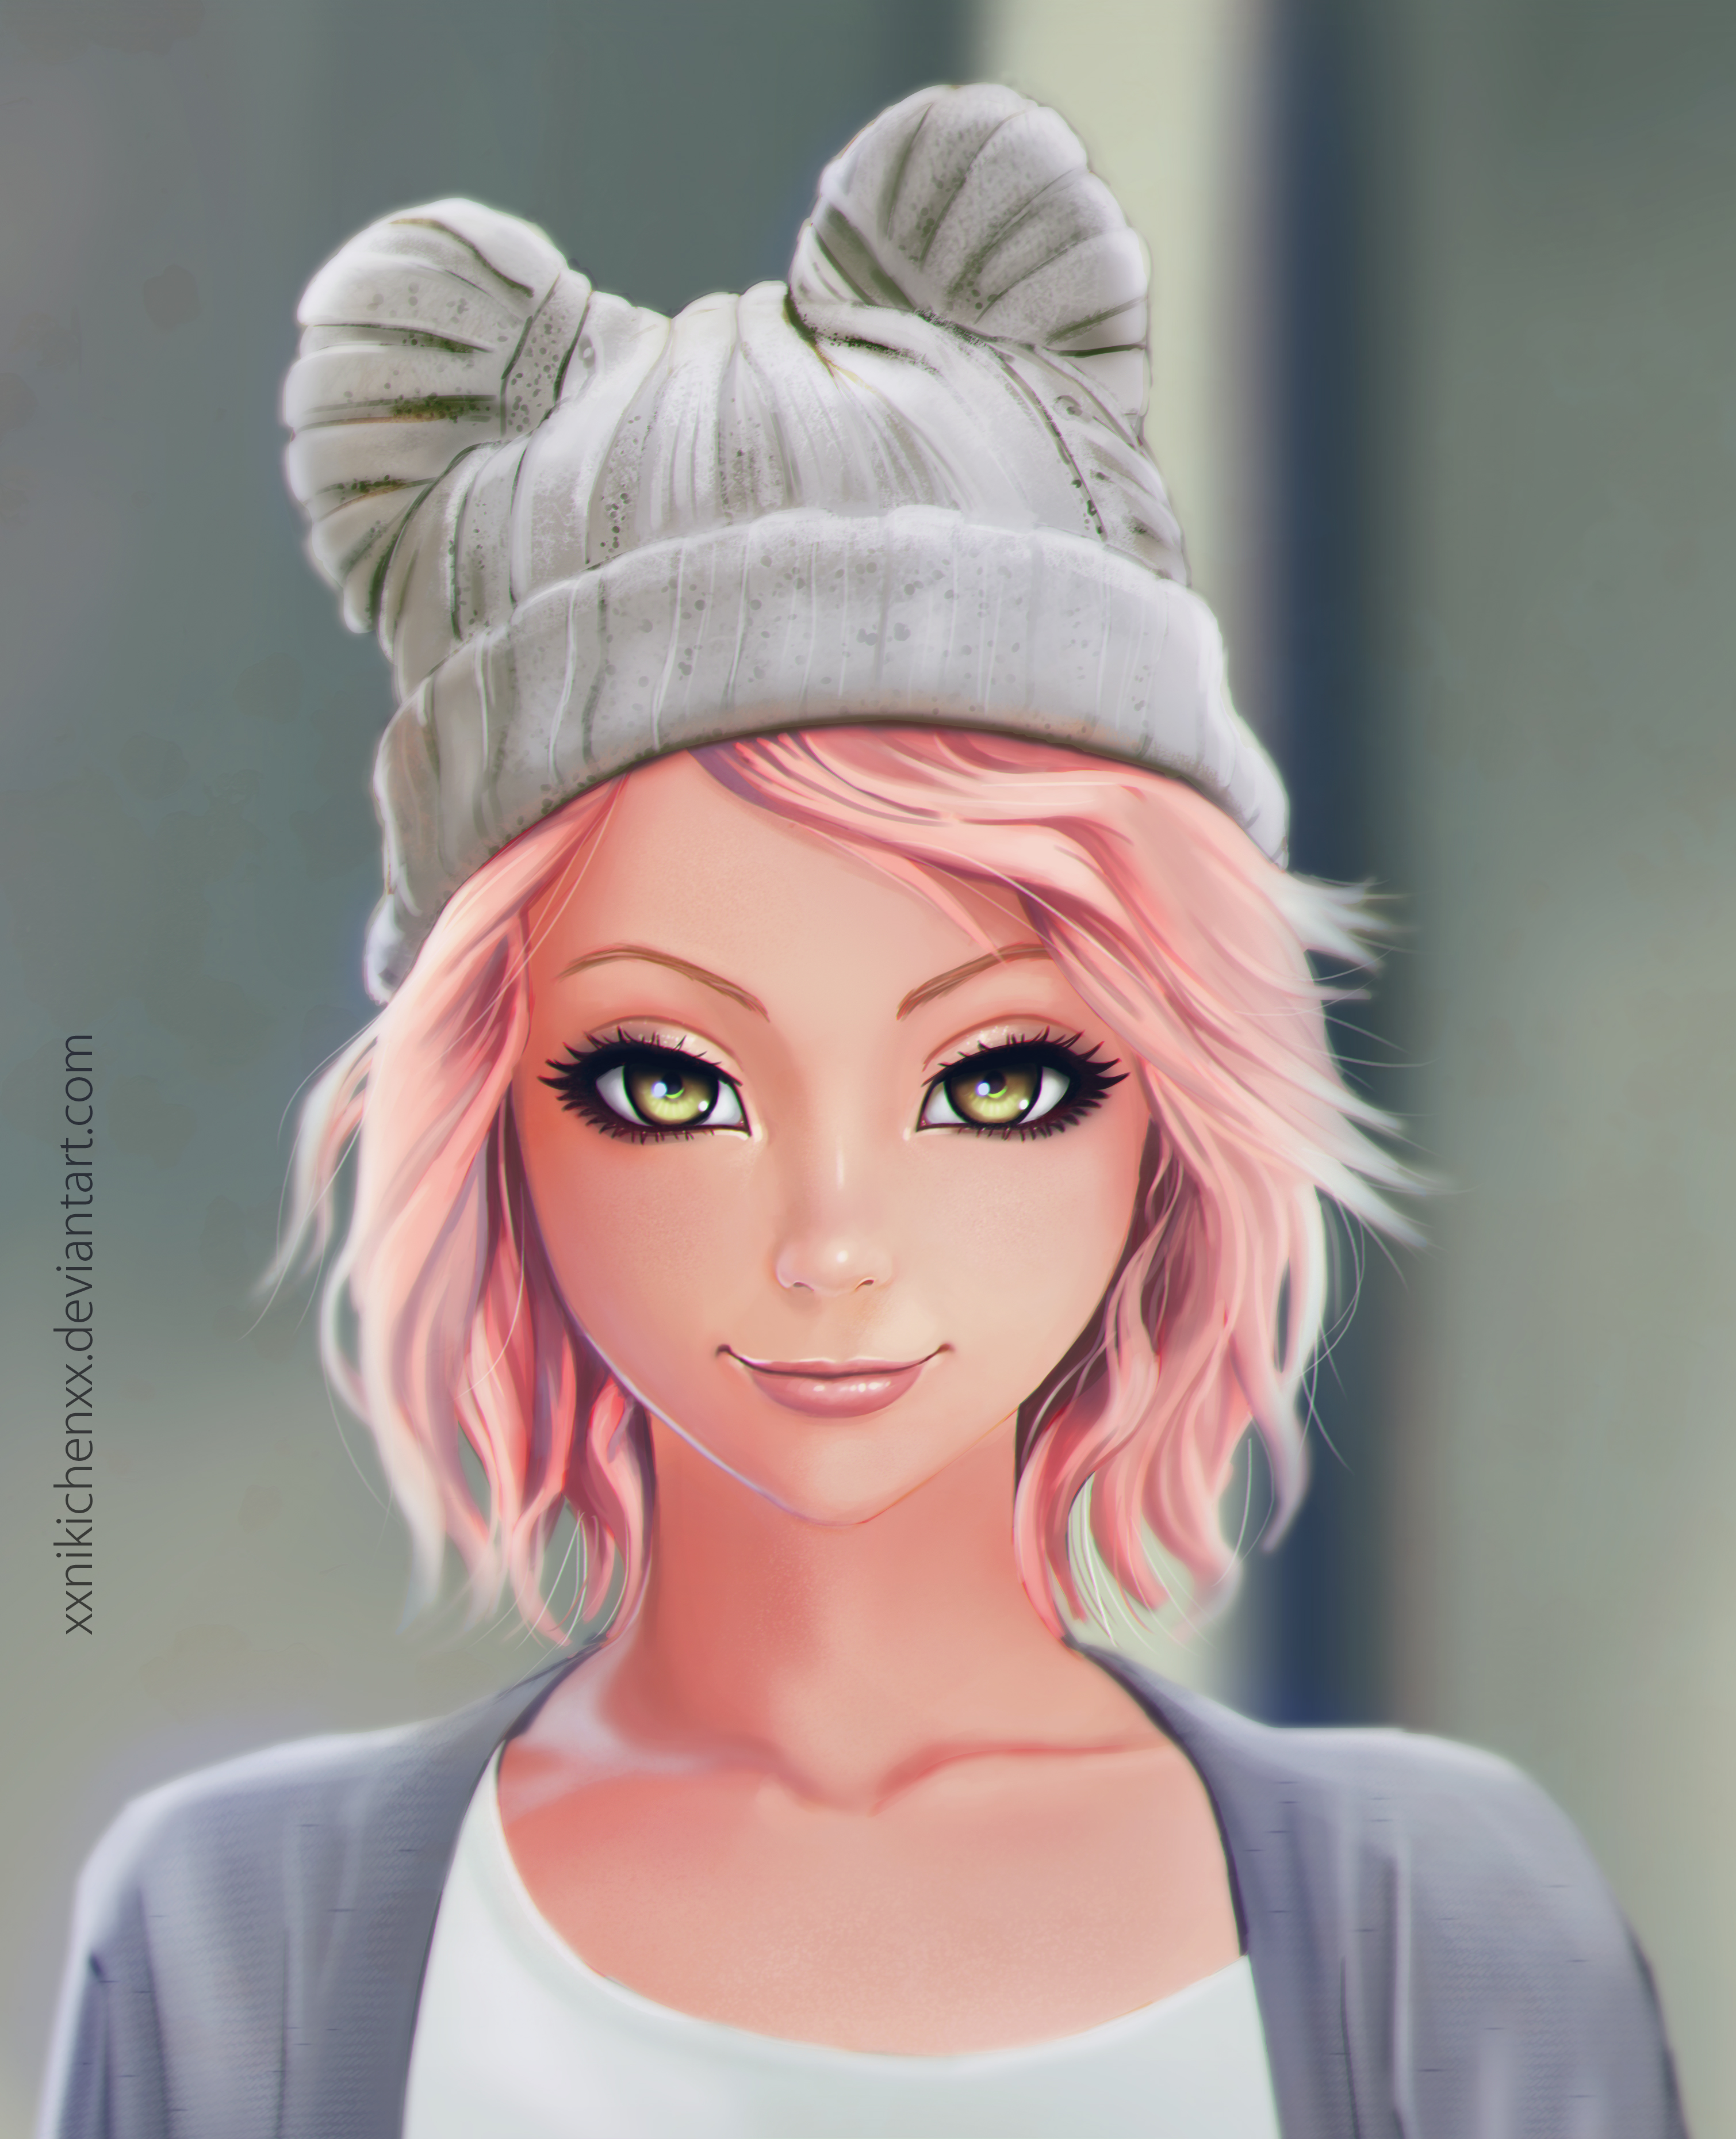 General 3019x3719 Nikita Varb women digital art artwork beanie pink hair short hair